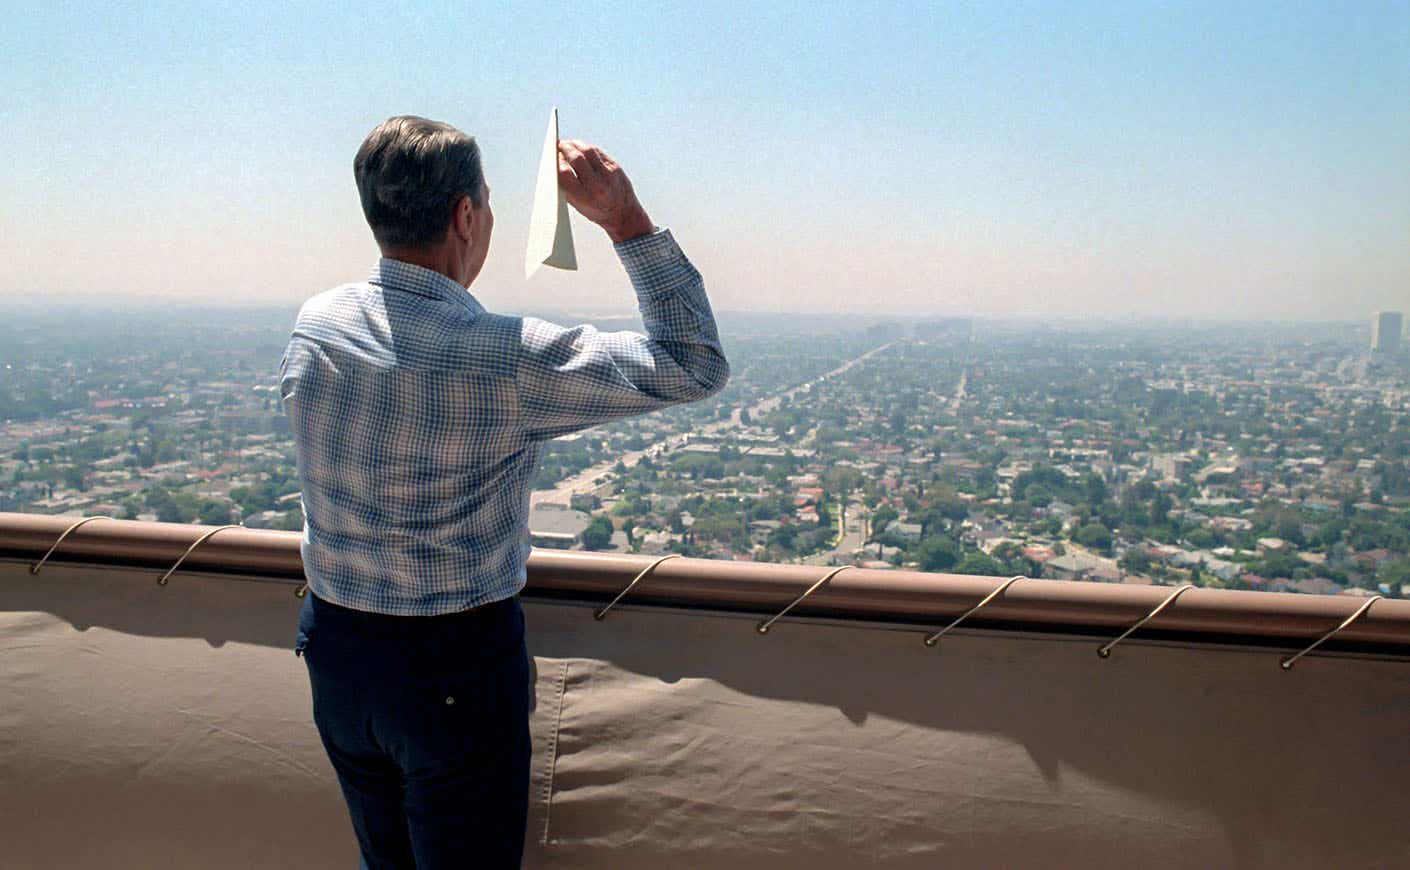 President Reagan throwing a paper airplane